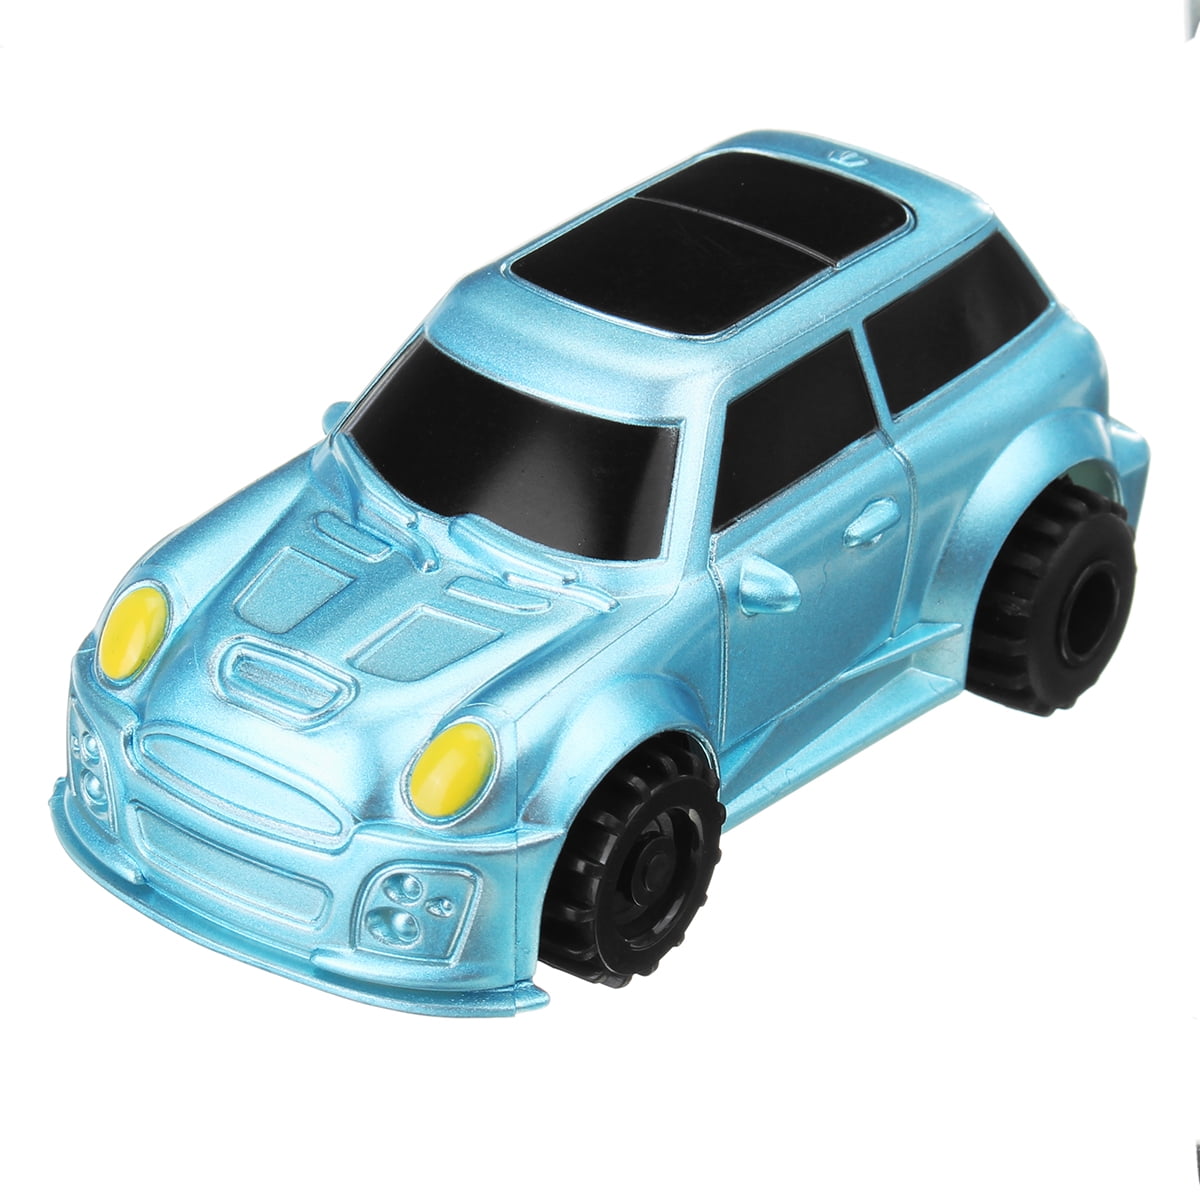 Magic Vehicles Follow the Black Line Blue Car YoCosii Inductive Truck Toy Cars 